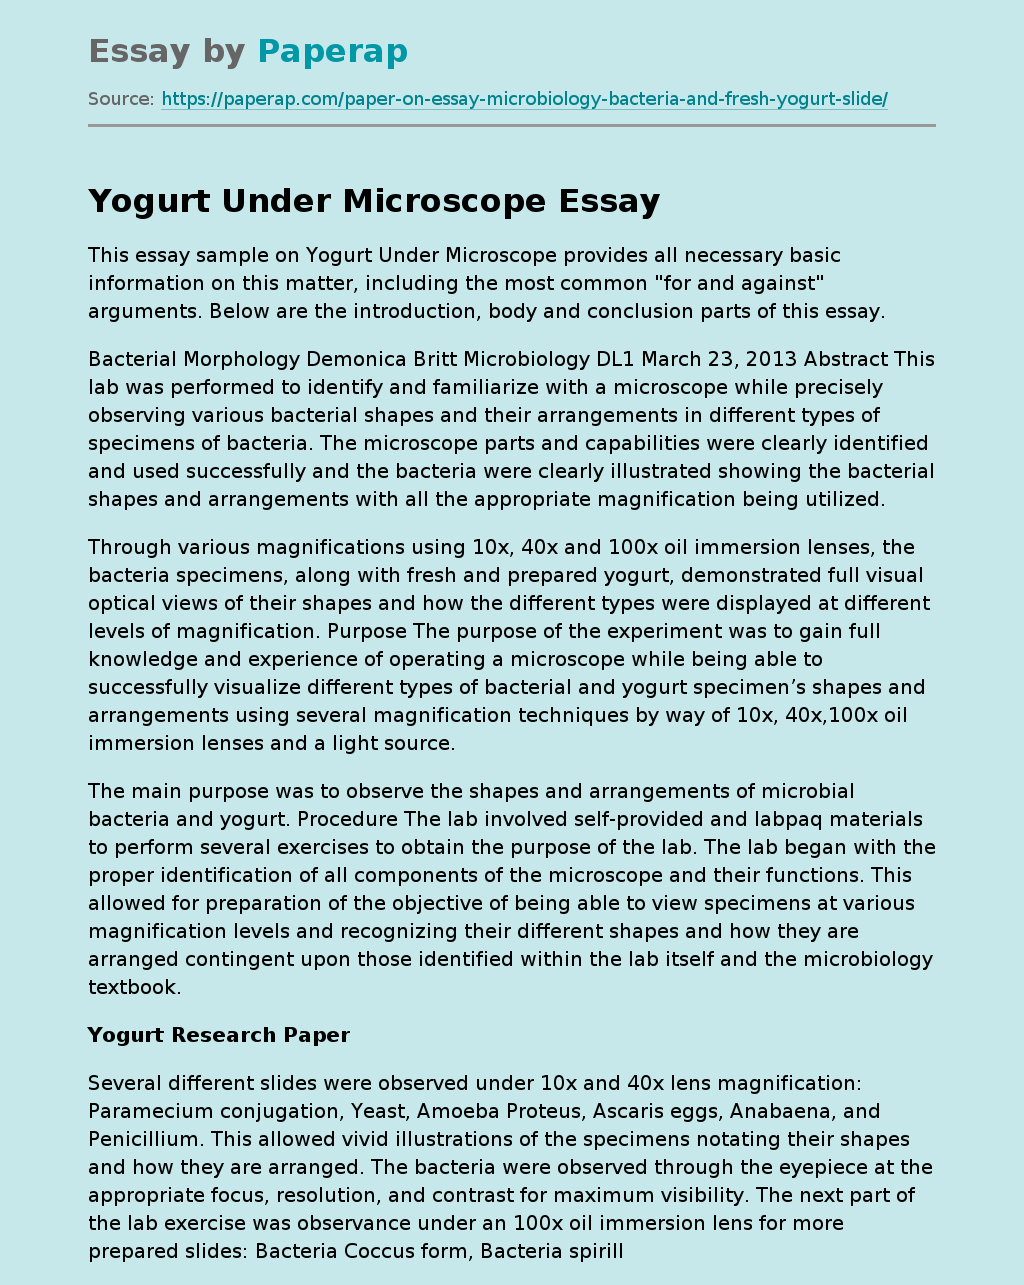 Yogurt Under Microscope